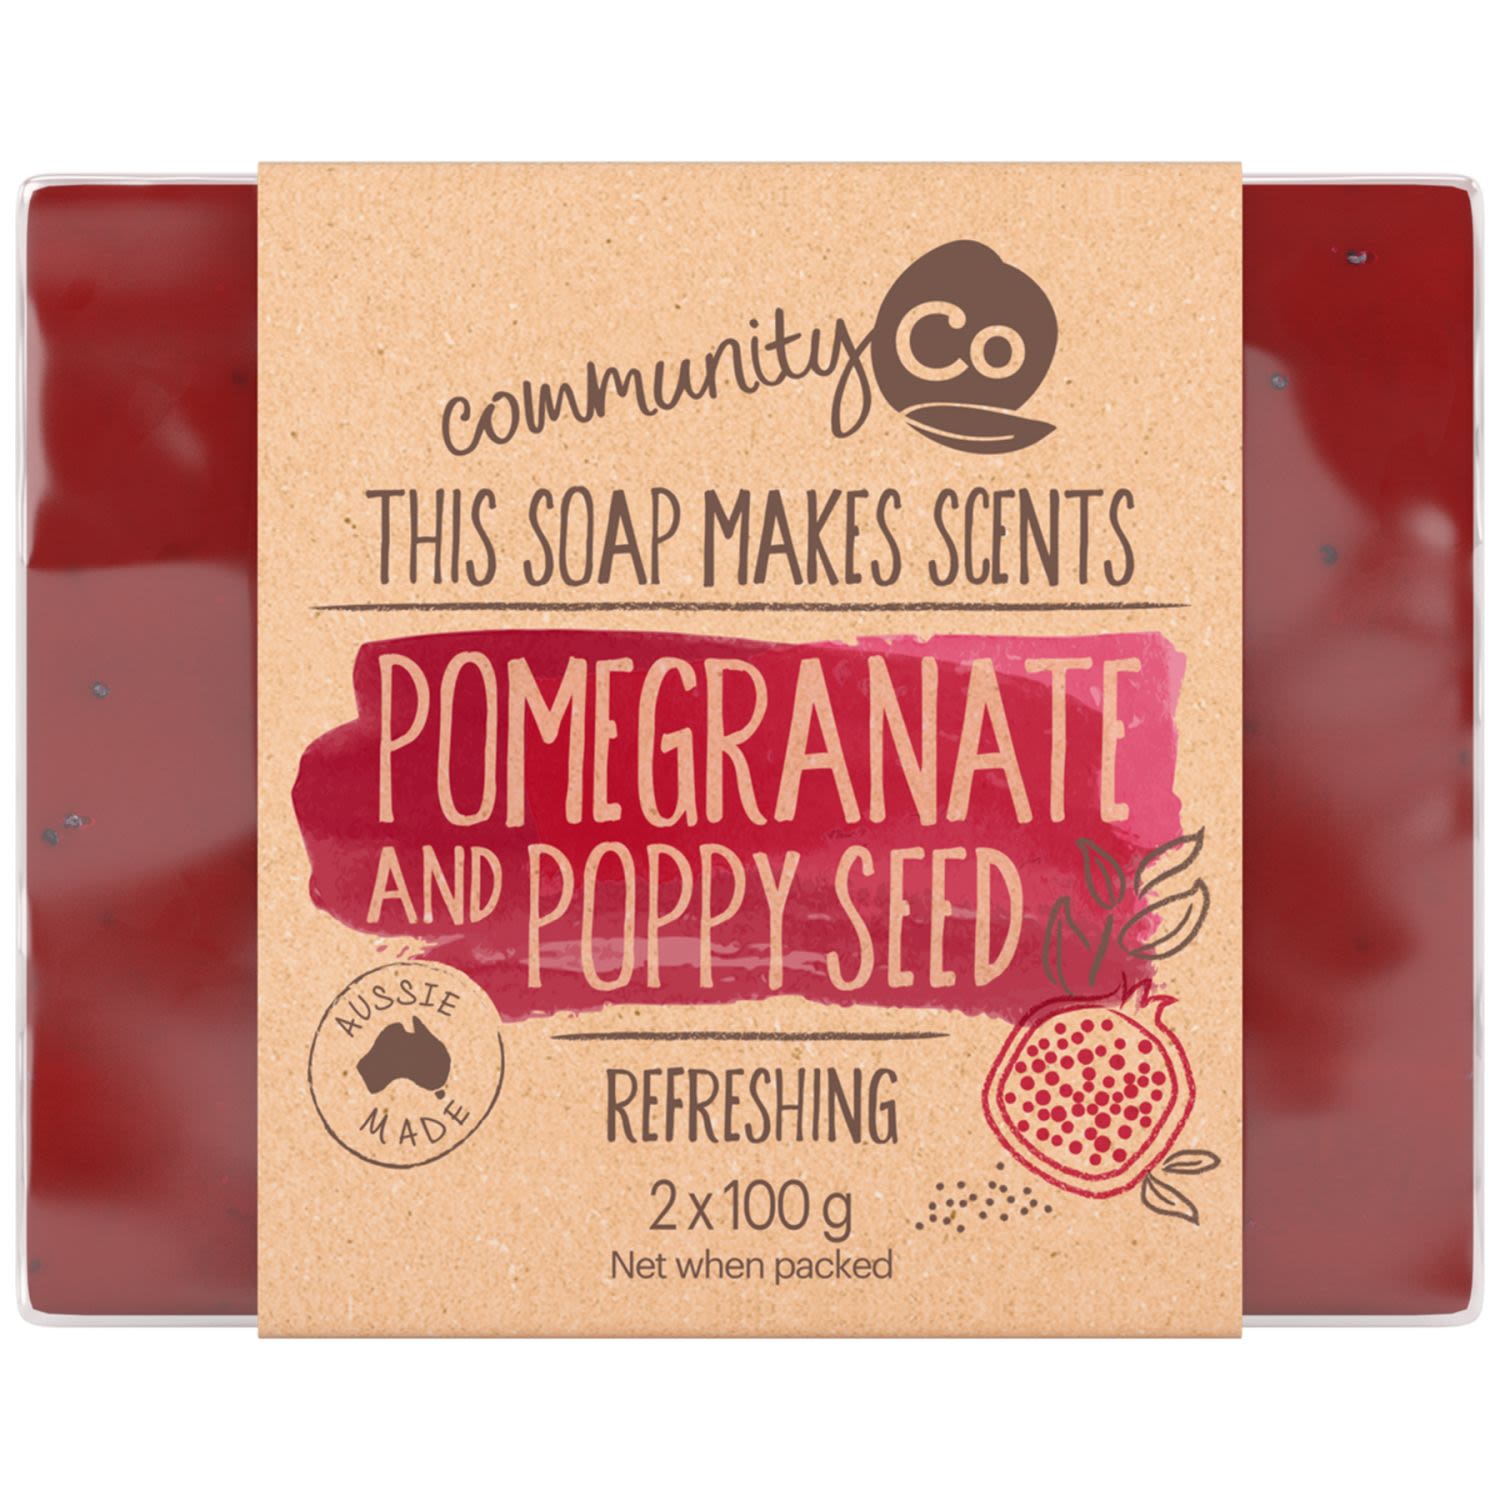 Community Co Pomegranate & Poppy Seed Soap, 2 Each